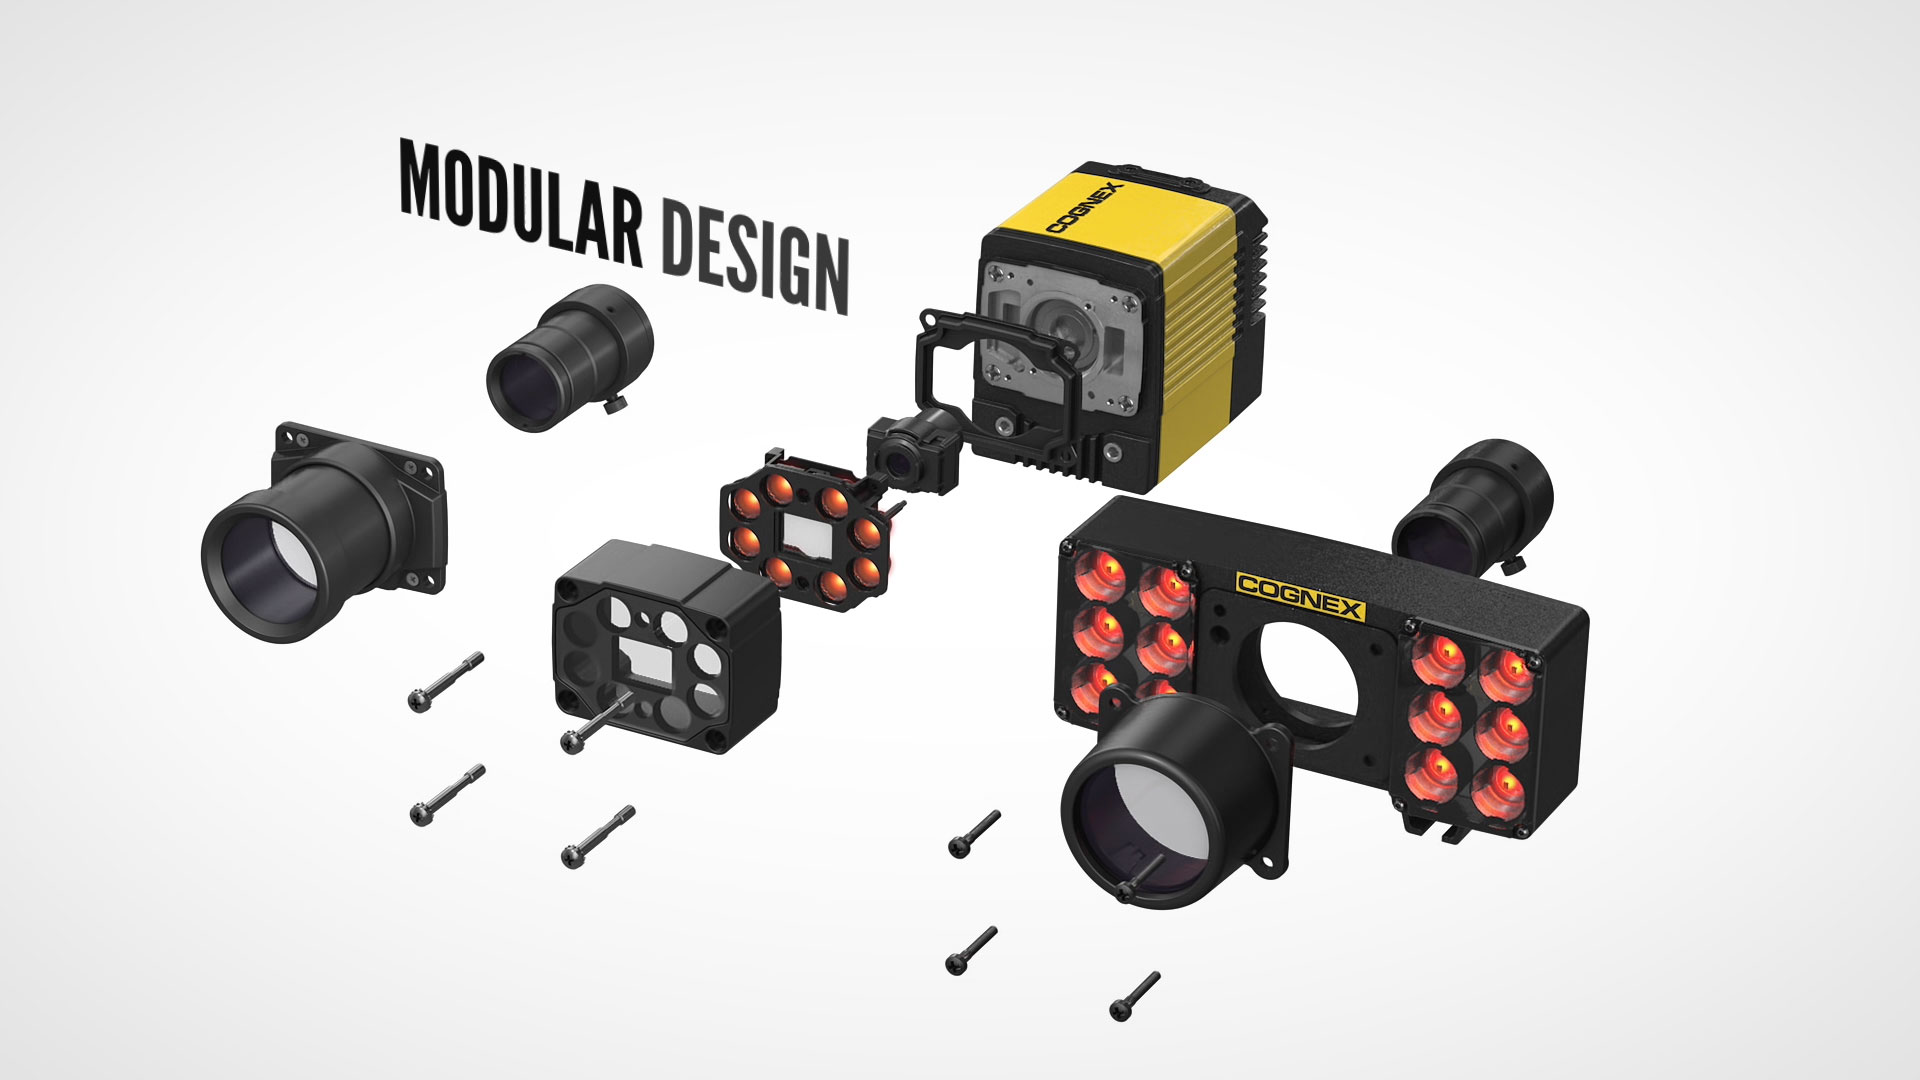 DataMan 470 Series modular design of available parts